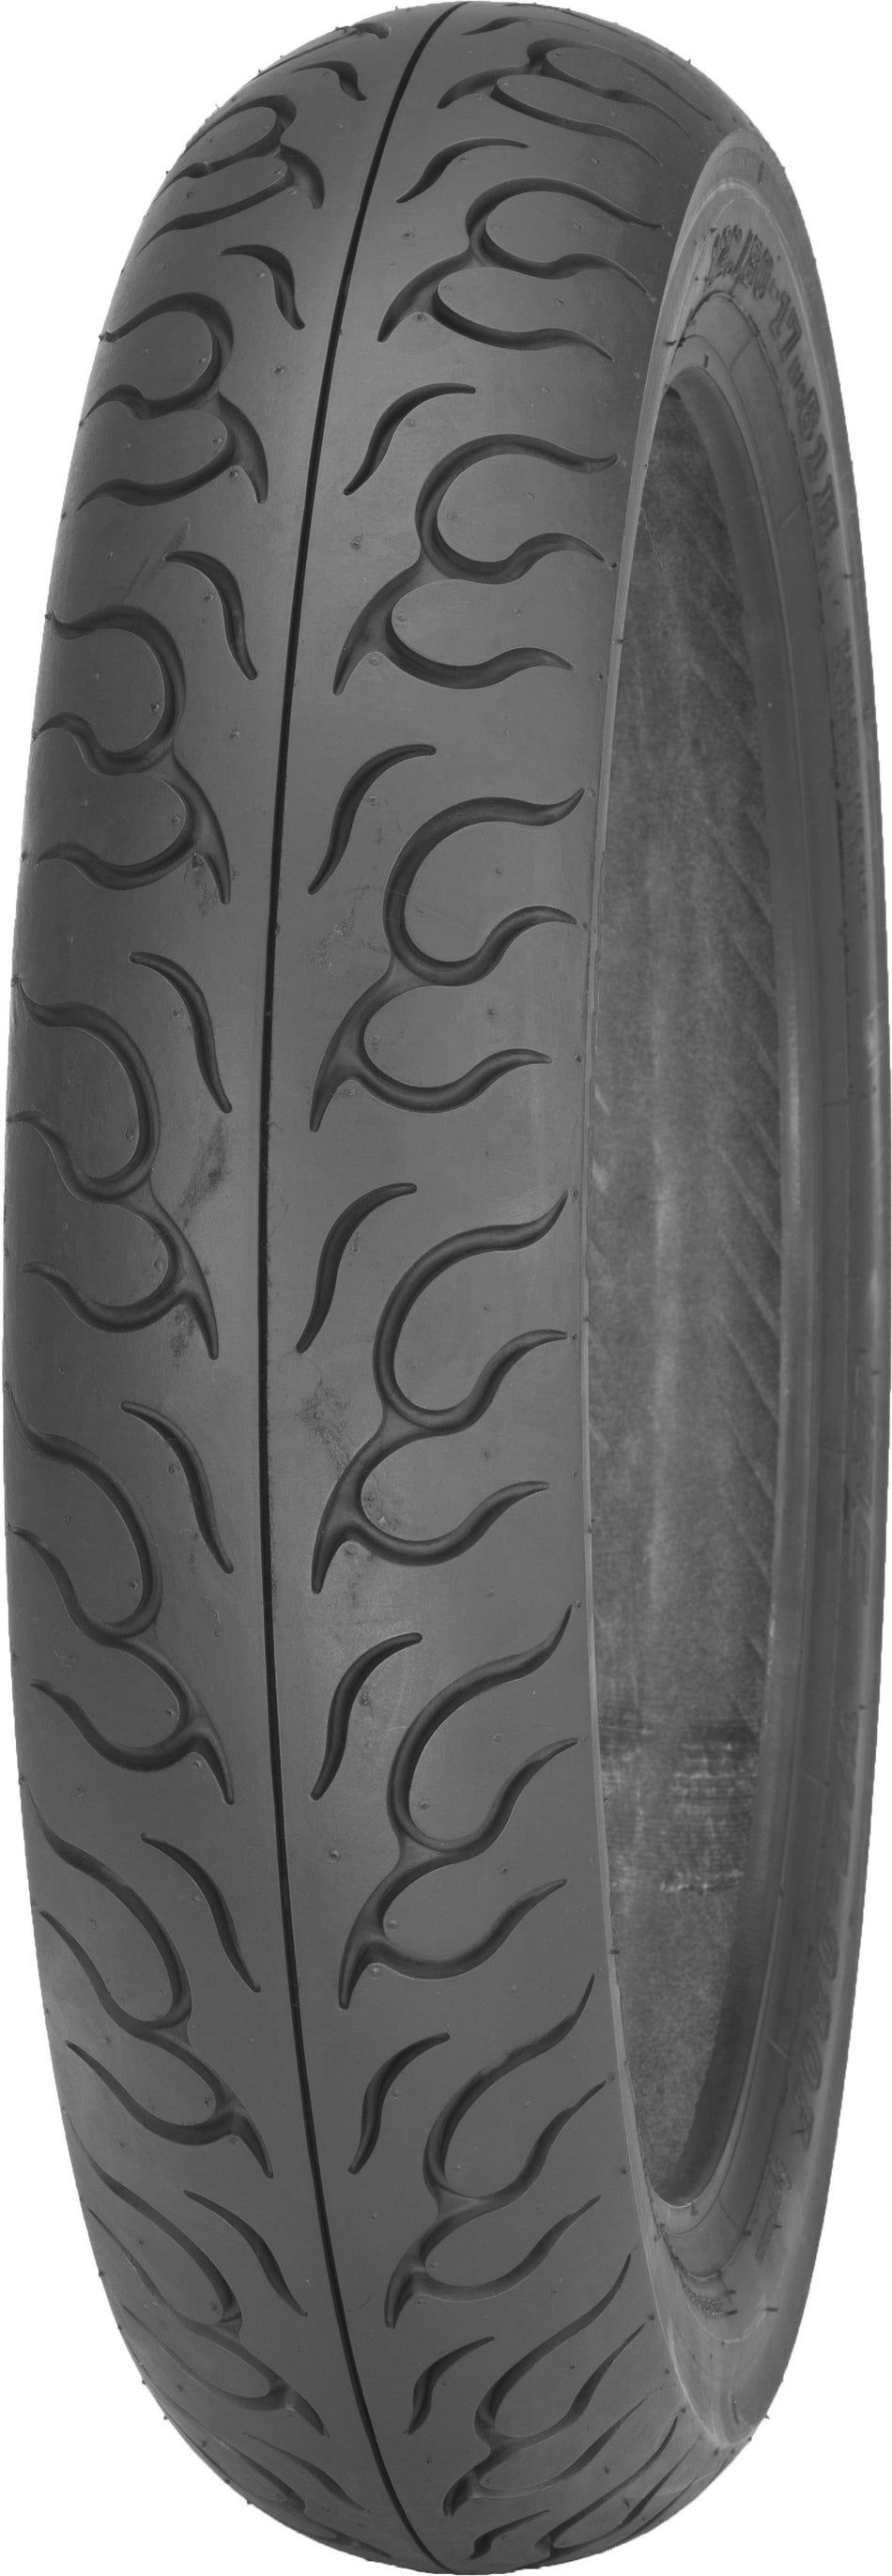 IRC Tire Wf-920 Front 3.00-19 49h Bias 301674